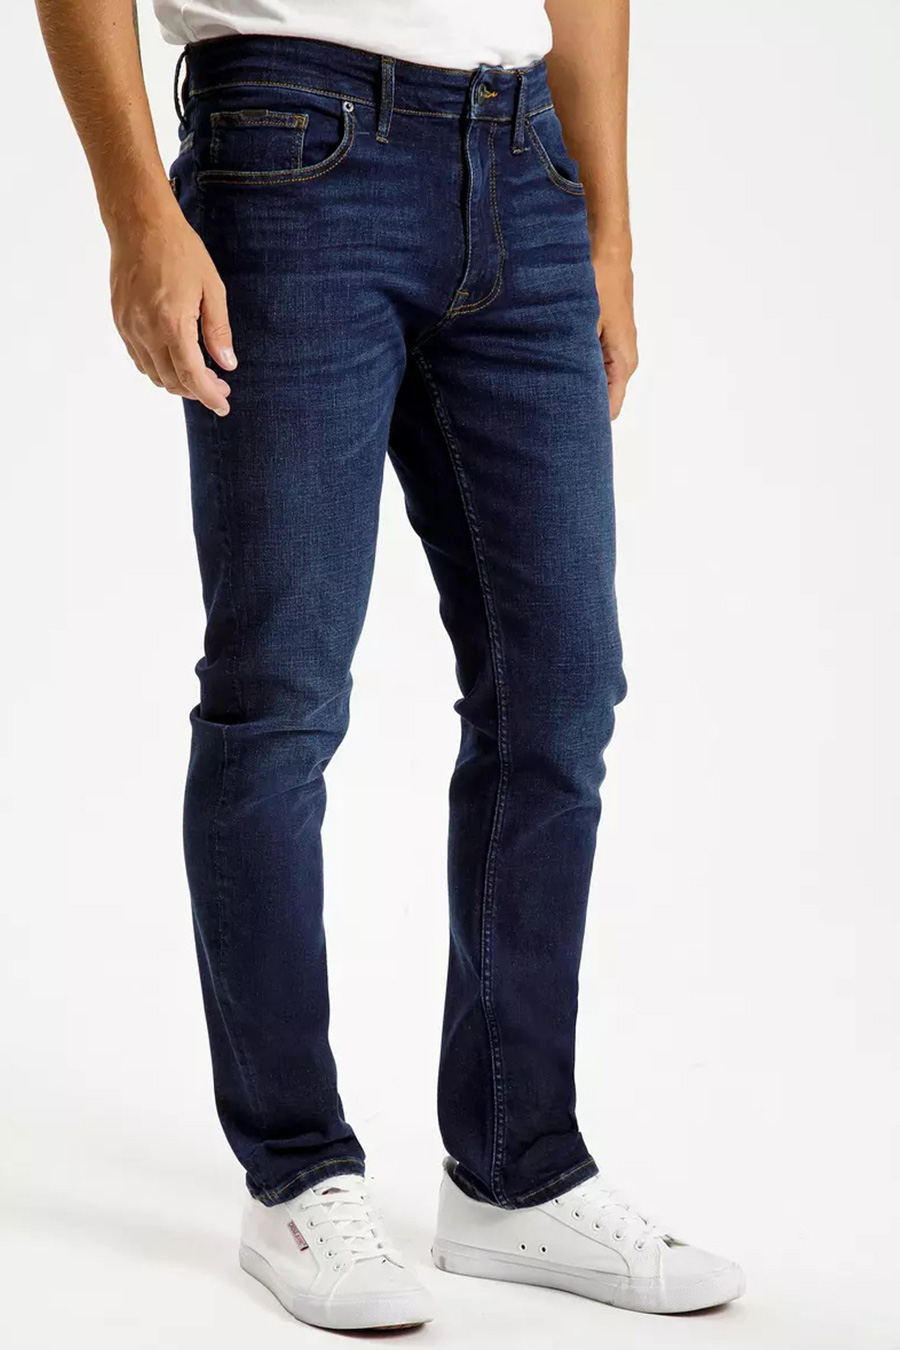 Jeans CROSS JEANS E169-067